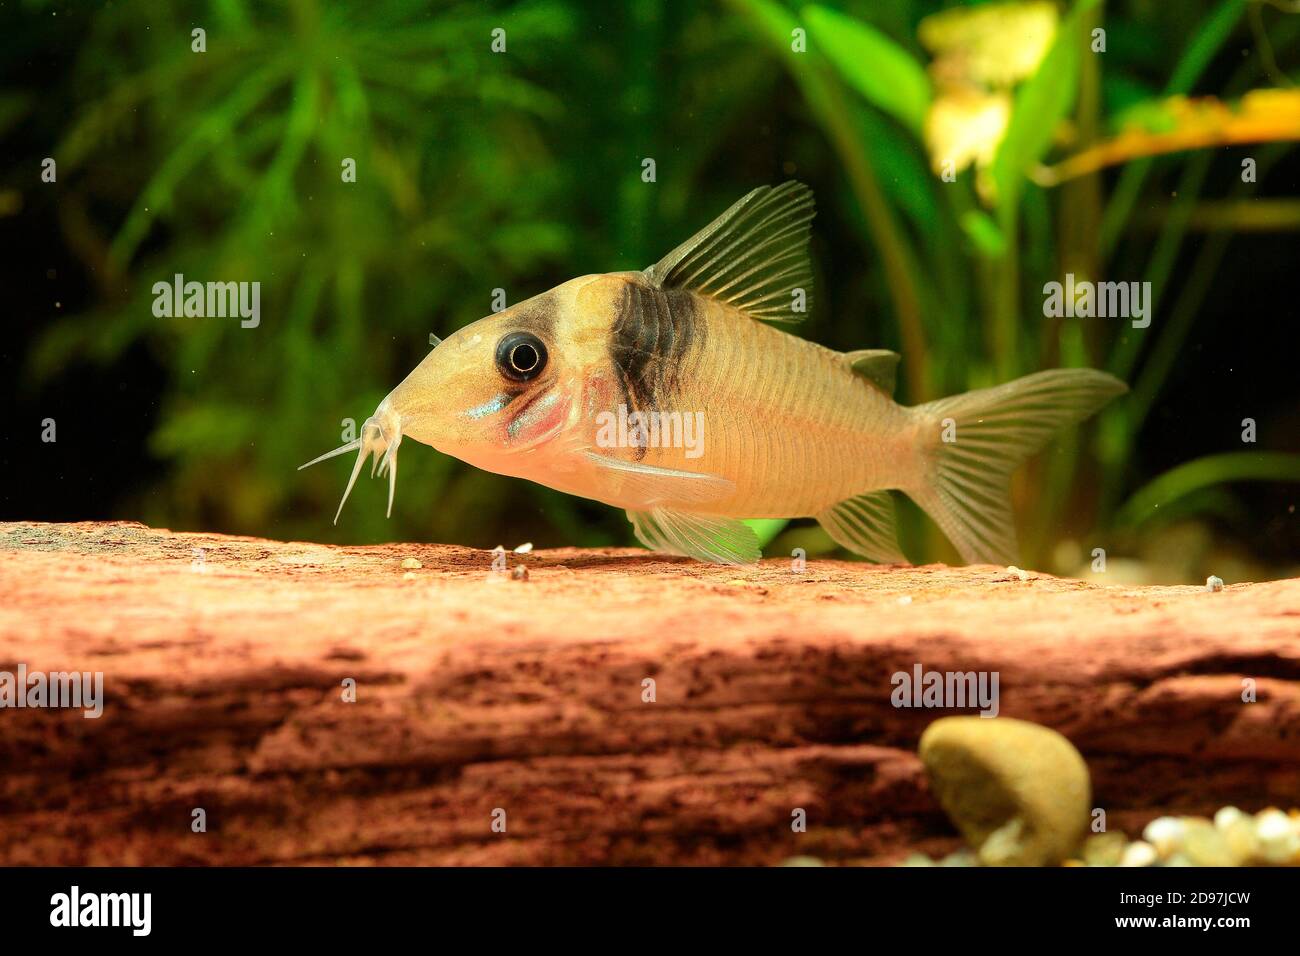 Cory catfish (Corydoras virginiae) in aquarium Stock Photo